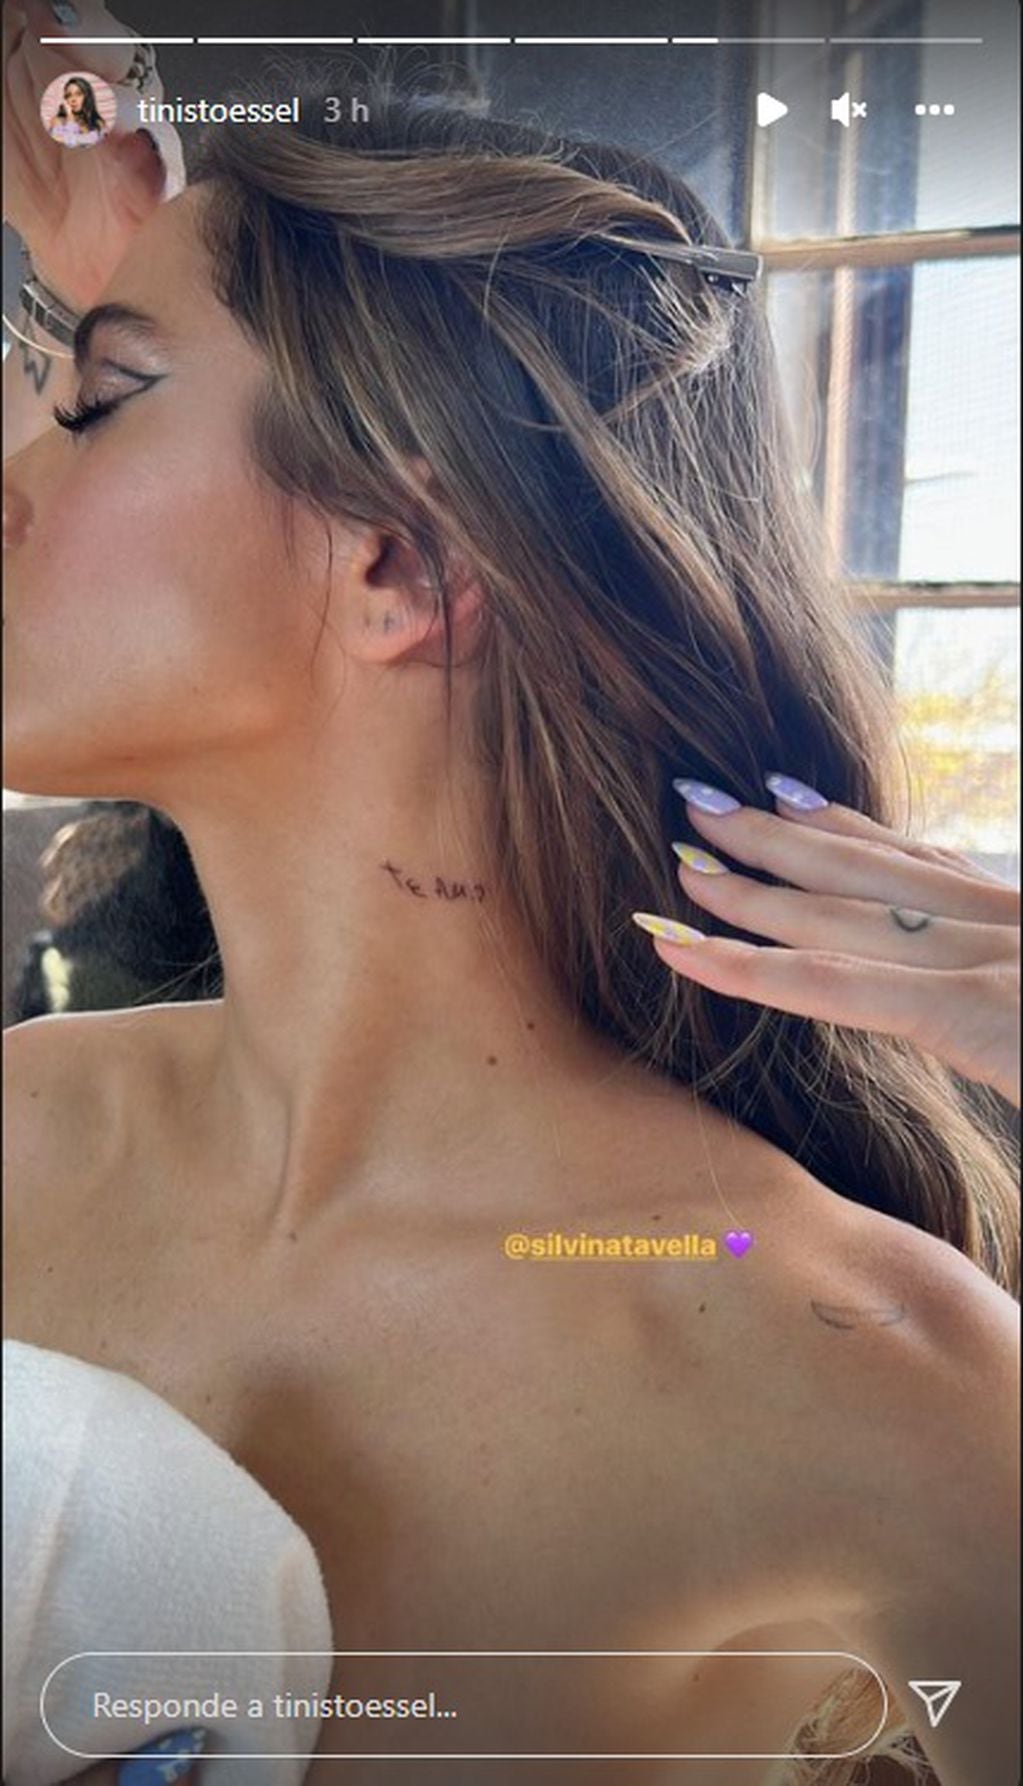 Tini Stoessel mostró su nuevo tatuaje